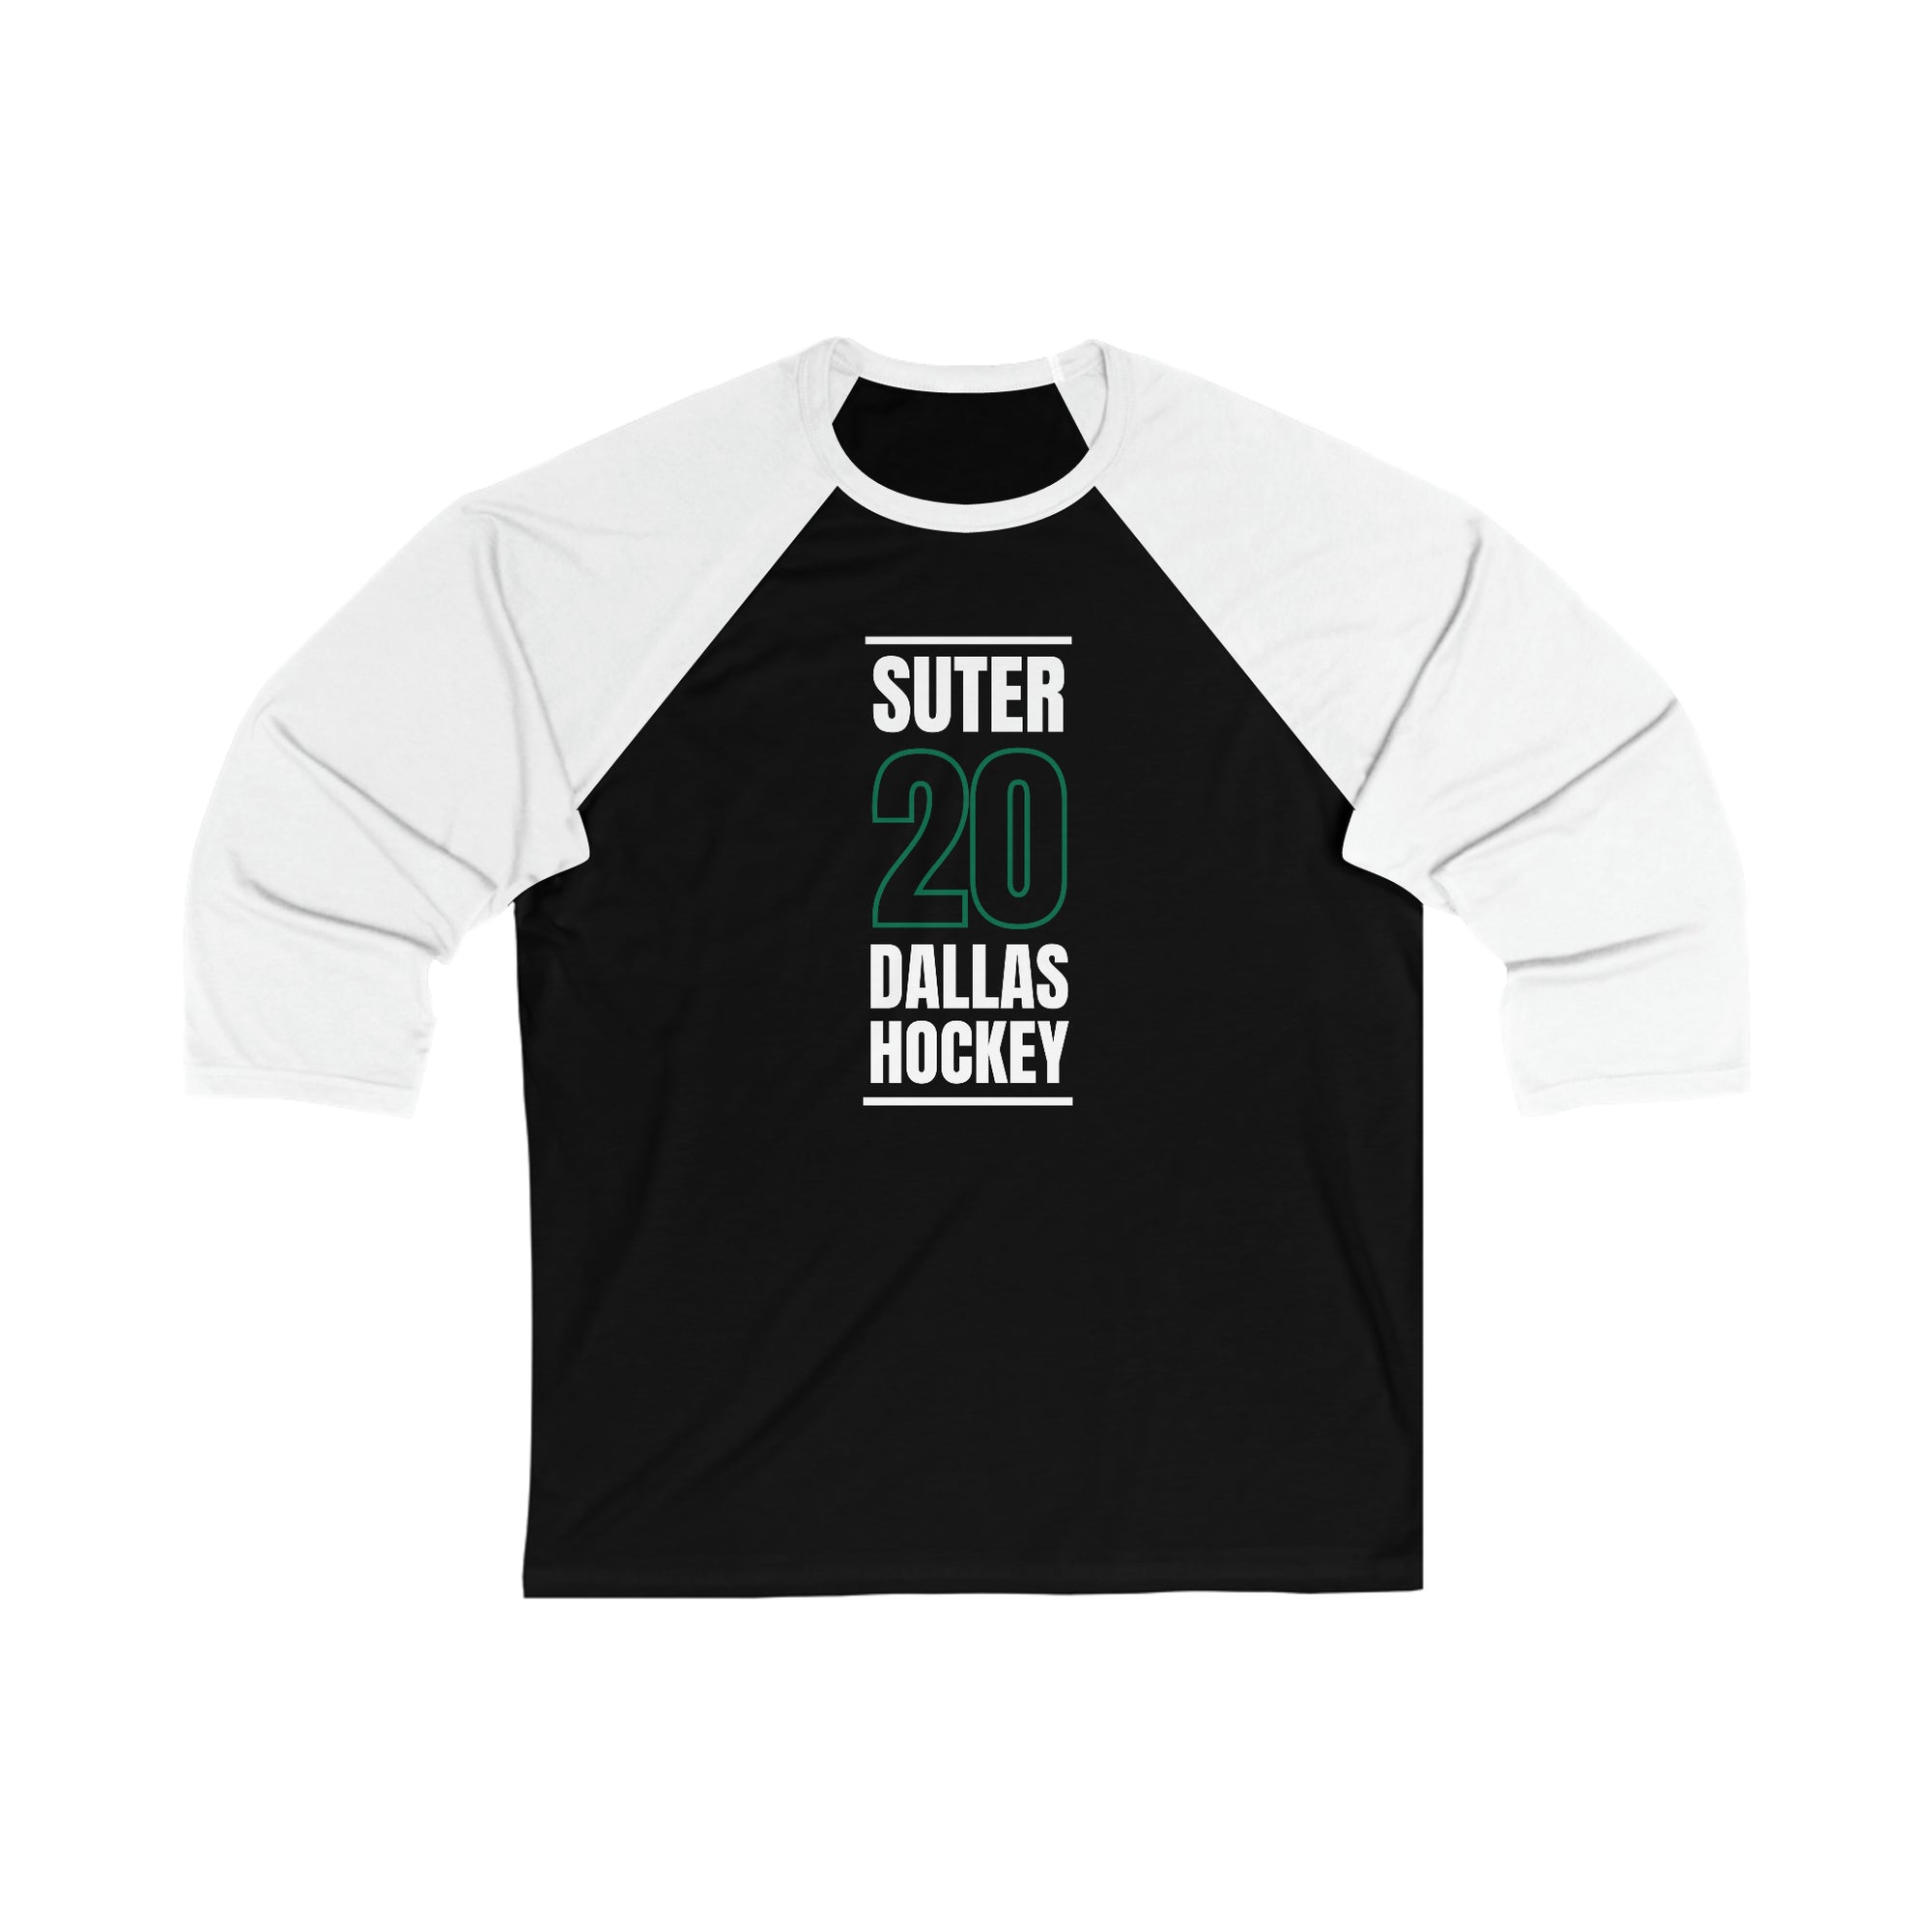 Suter 20 Dallas Hockey Black Vertical Design Unisex Tri-Blend 3/4 Sleeve Raglan Baseball Shirt